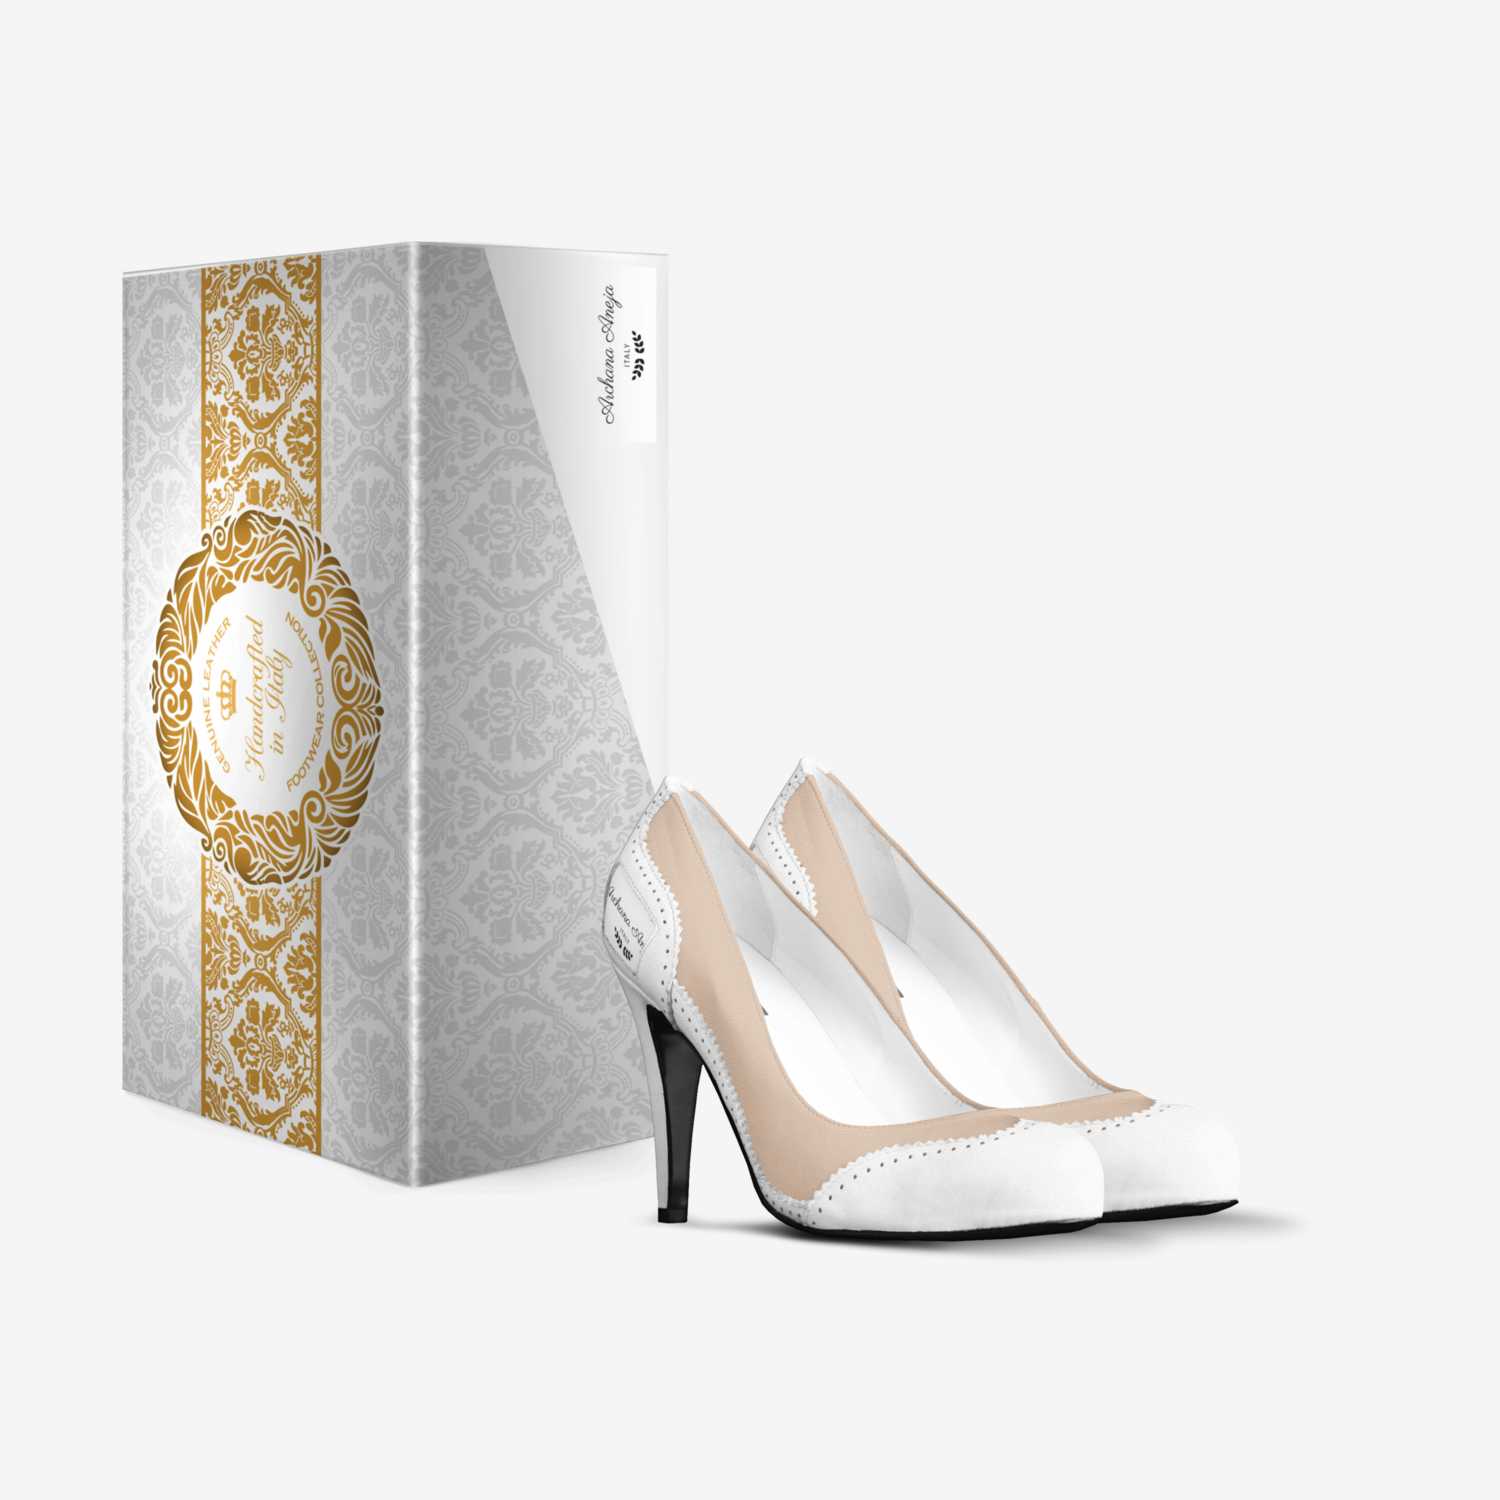 Archana Aneja custom made in Italy shoes by Archana Aneja | Box view